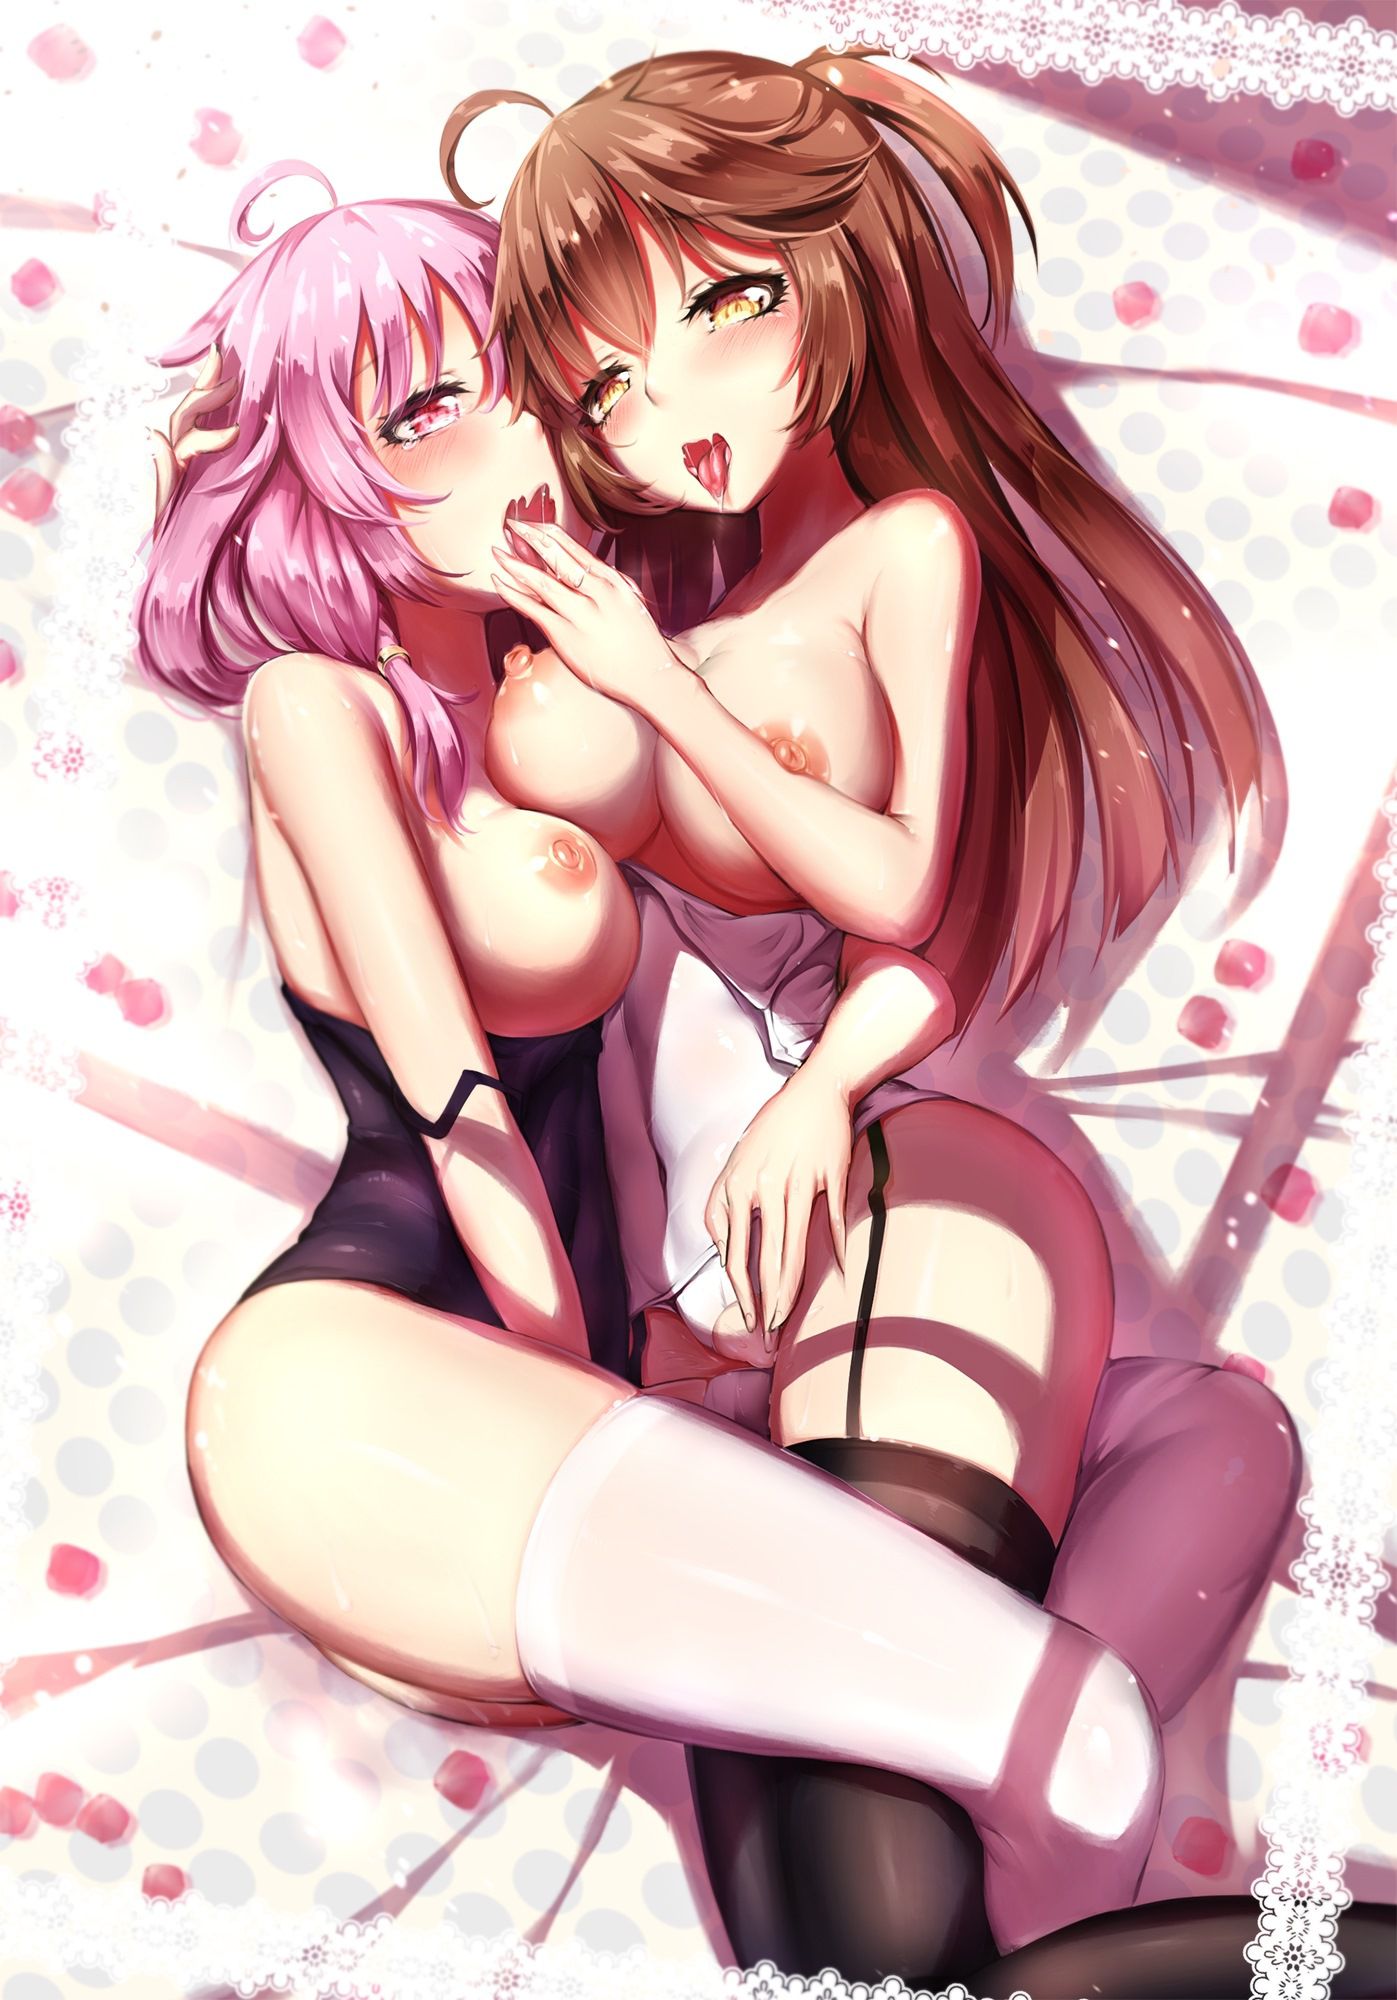 Erotic pictures of girls having sex yuri flirting (secondary erotic) Part1 22